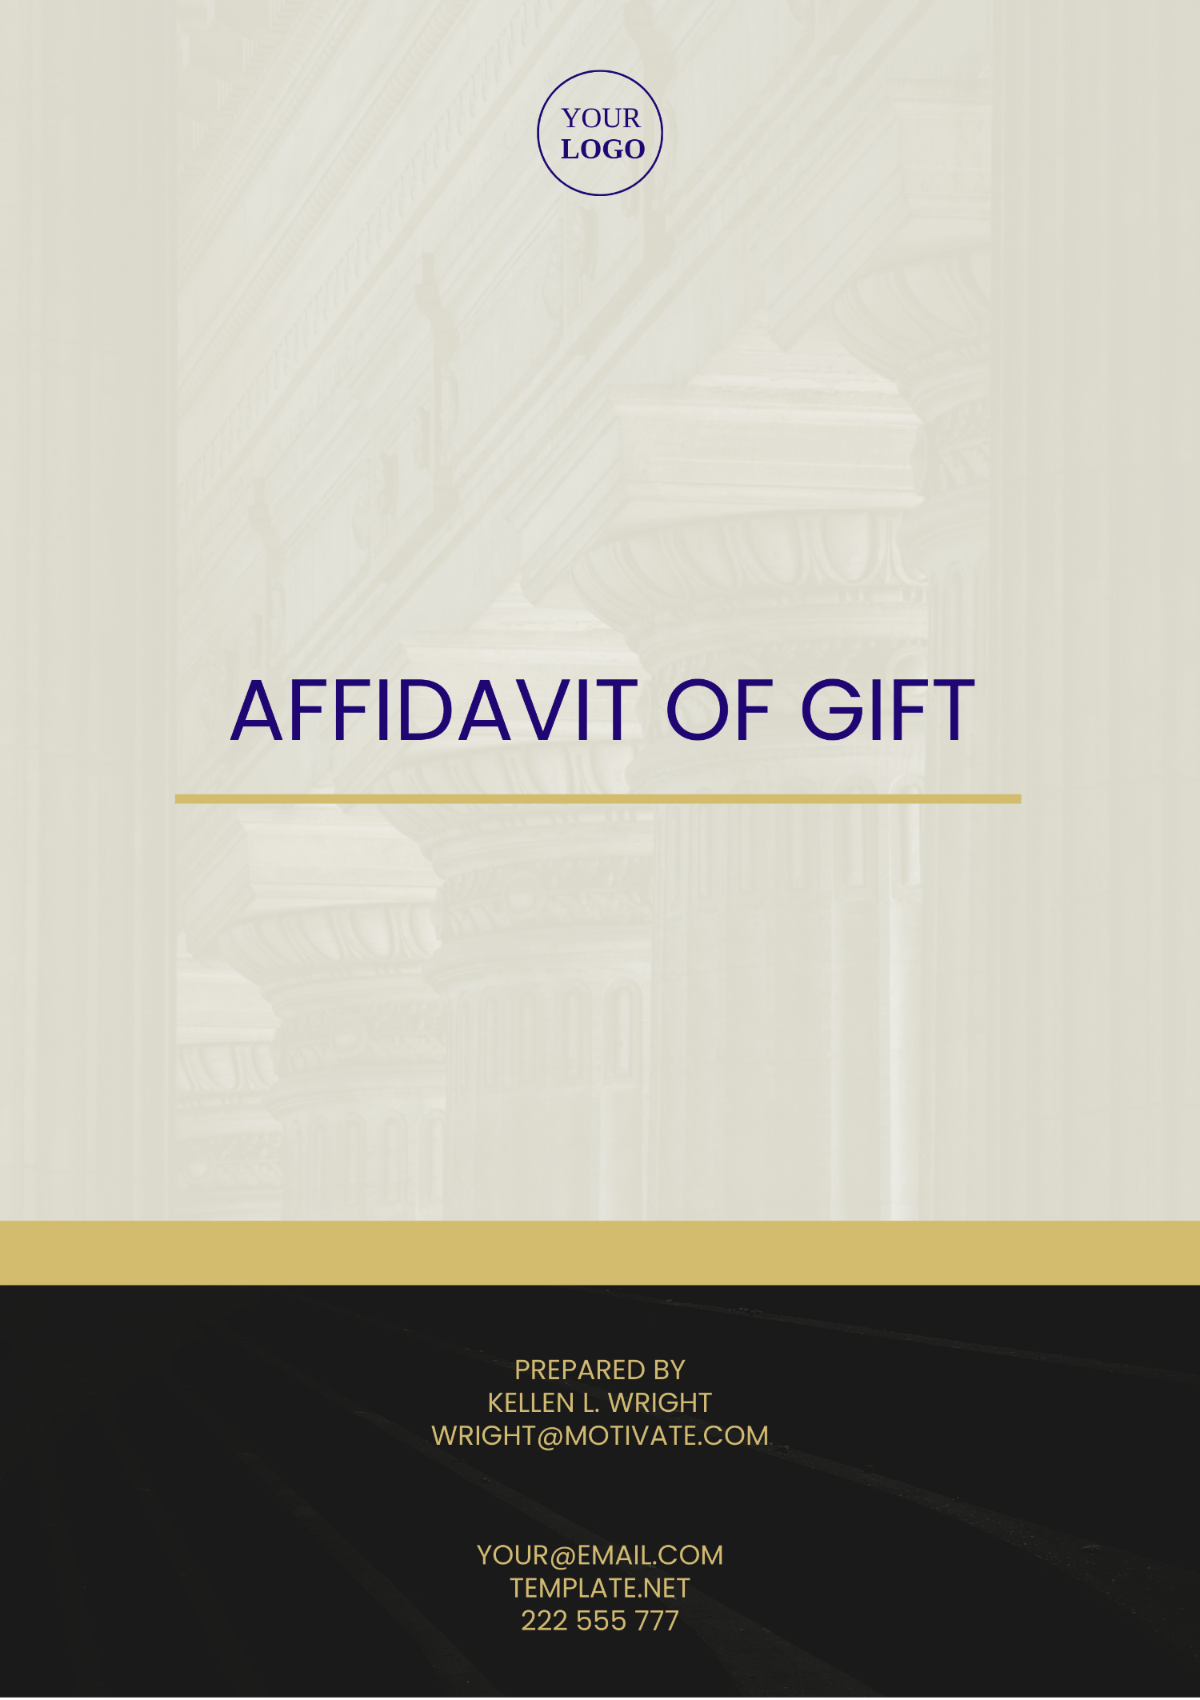 South Carolina Affidavit of Gift Template